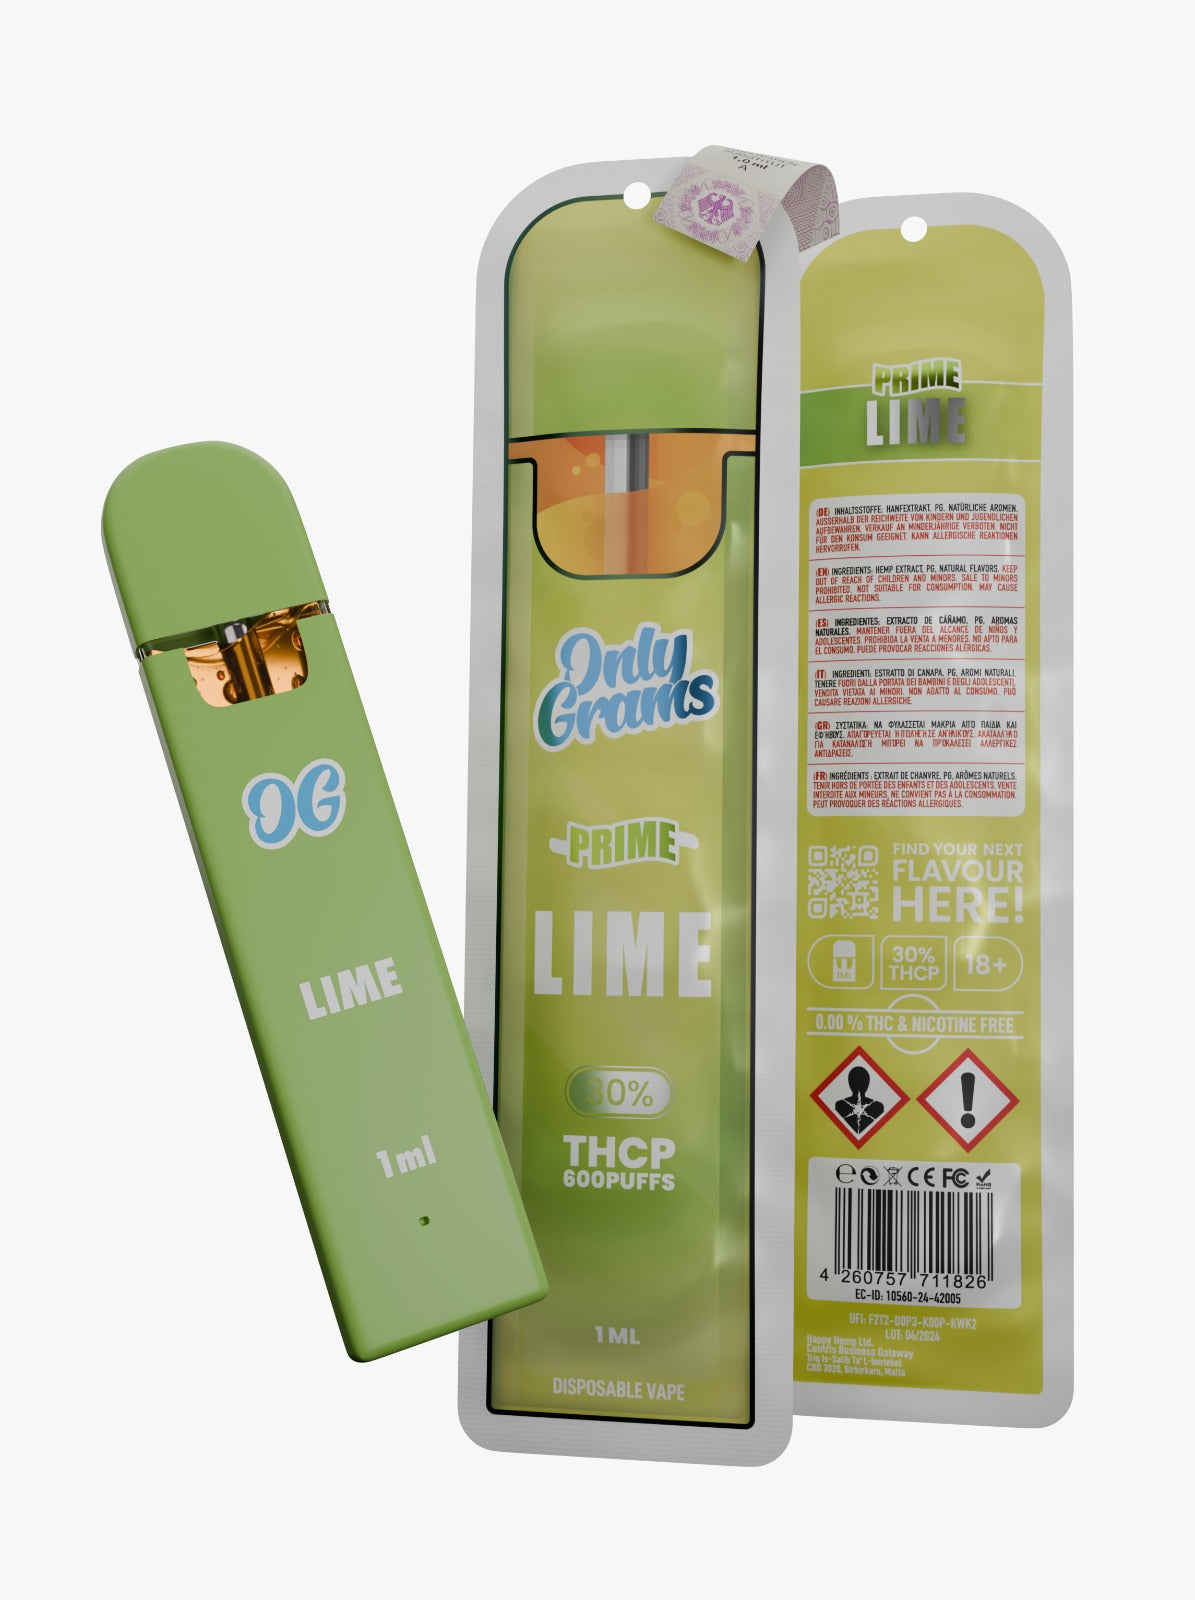 OnlyGrams Lime THCP 30% Vape